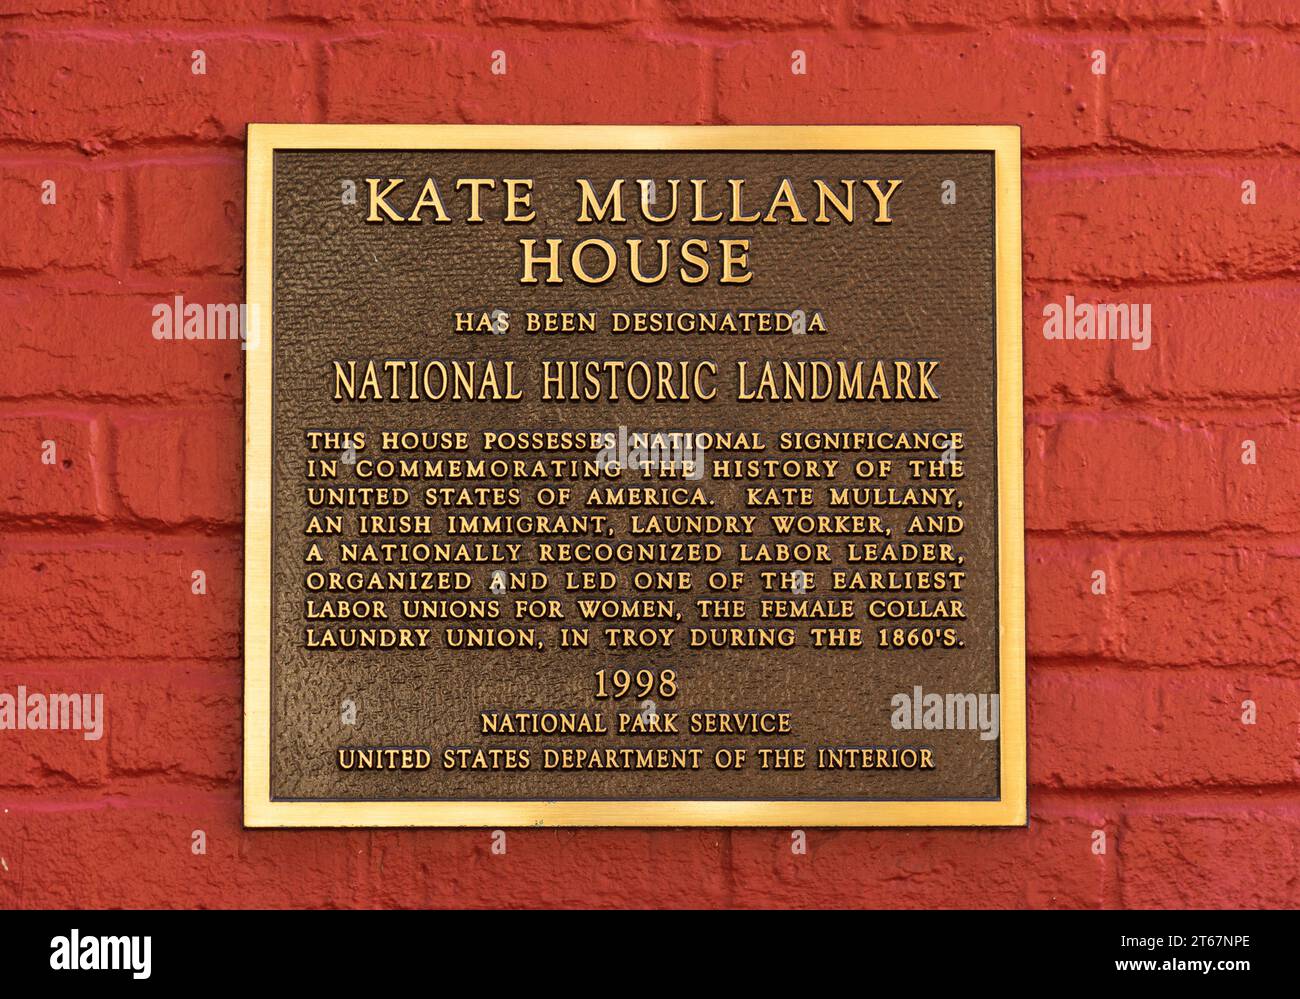 Kate Mullany House Historical Landmark in Upstate New York Stockfoto